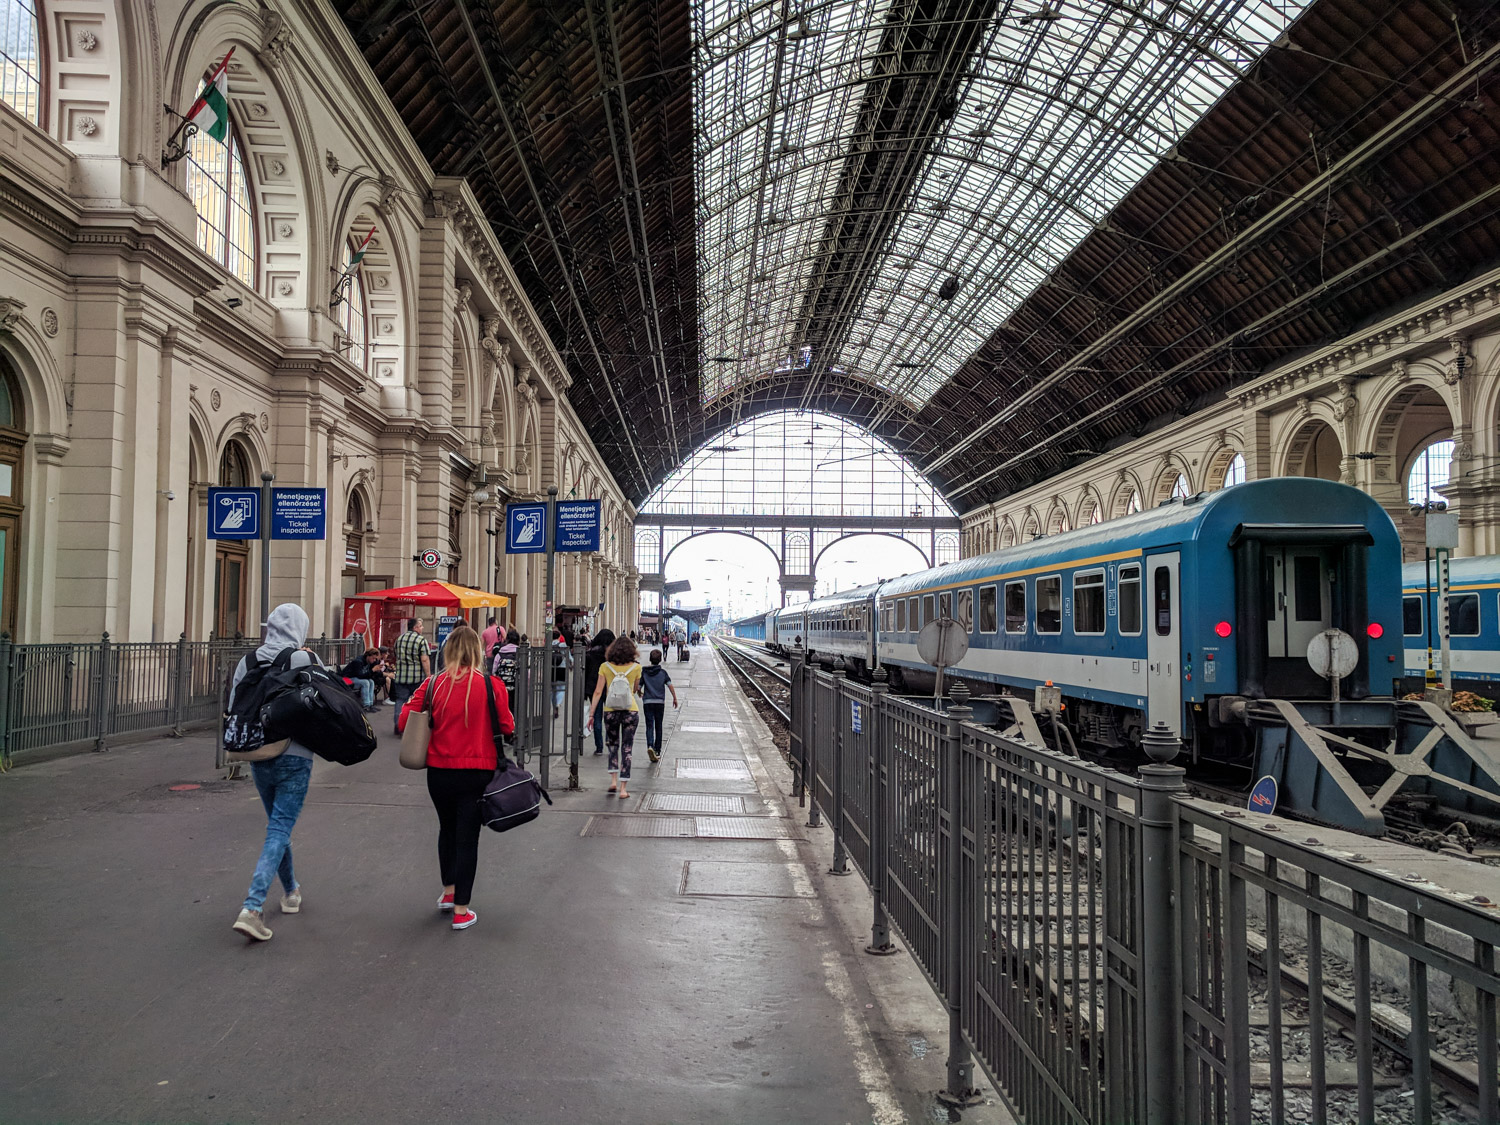 Inside the Budapest Train Station